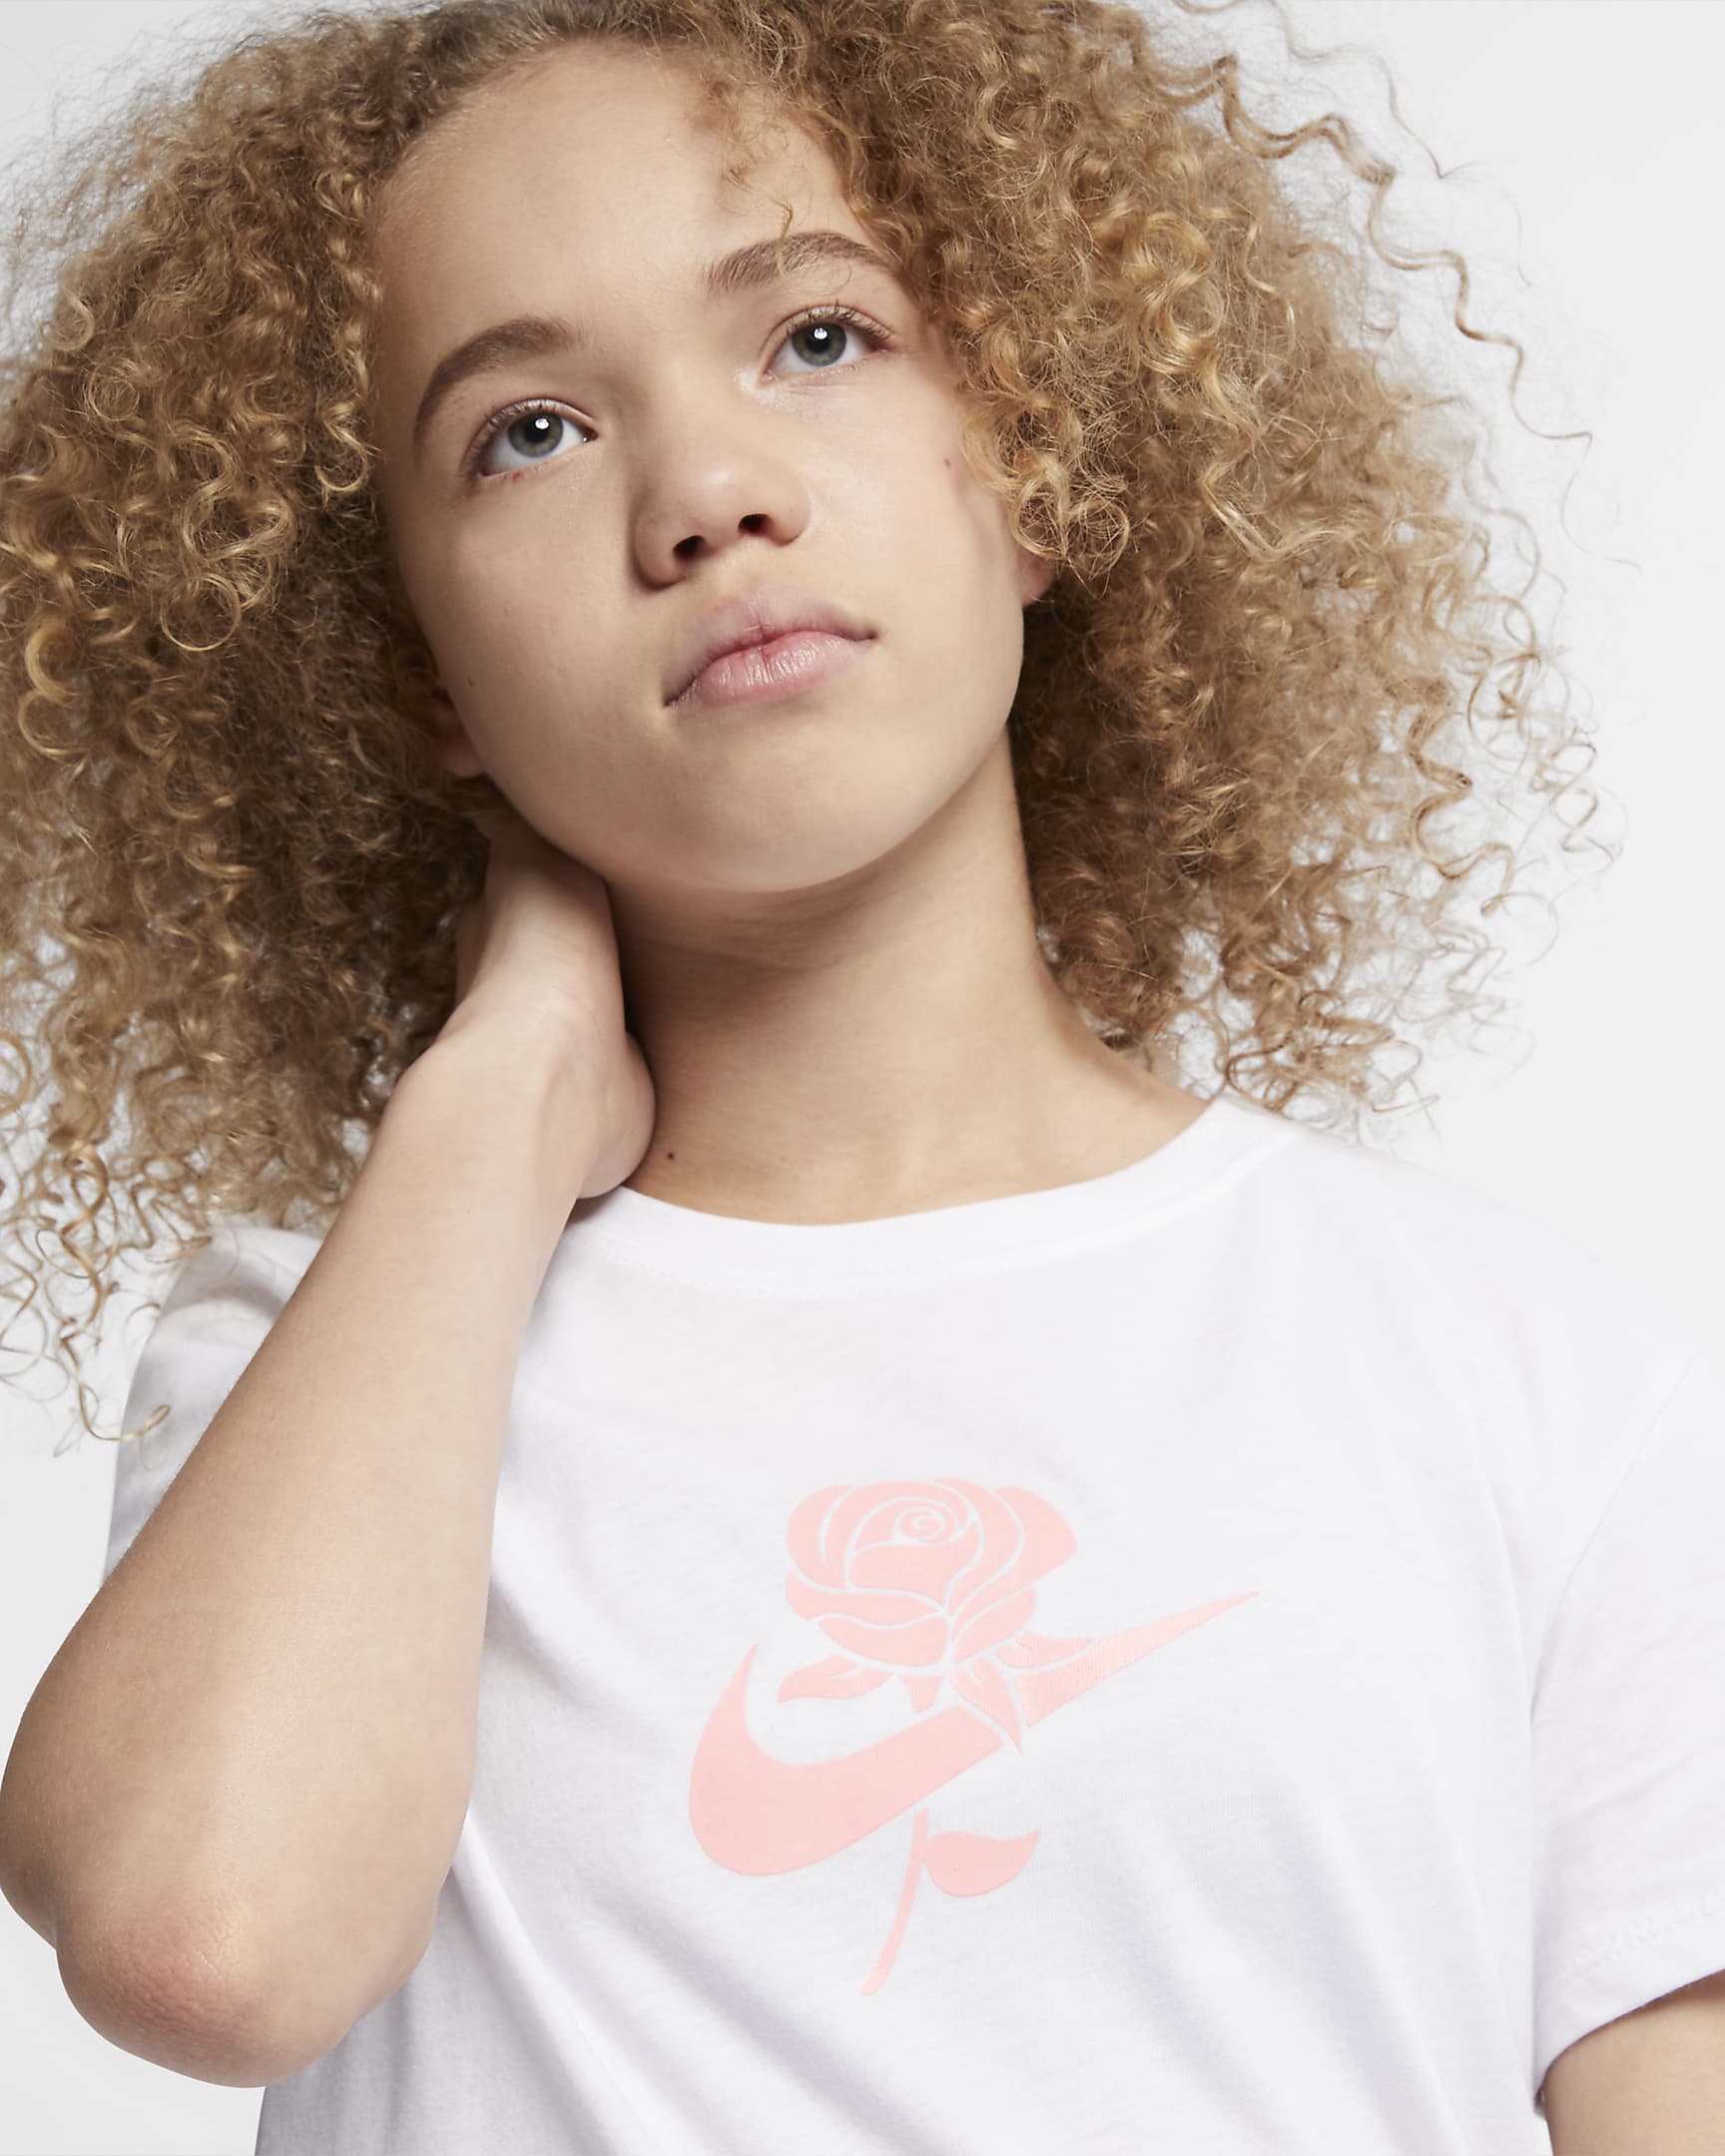 Nike Sportswear Older Kids' (Girls') T-Shirt. Nike SK